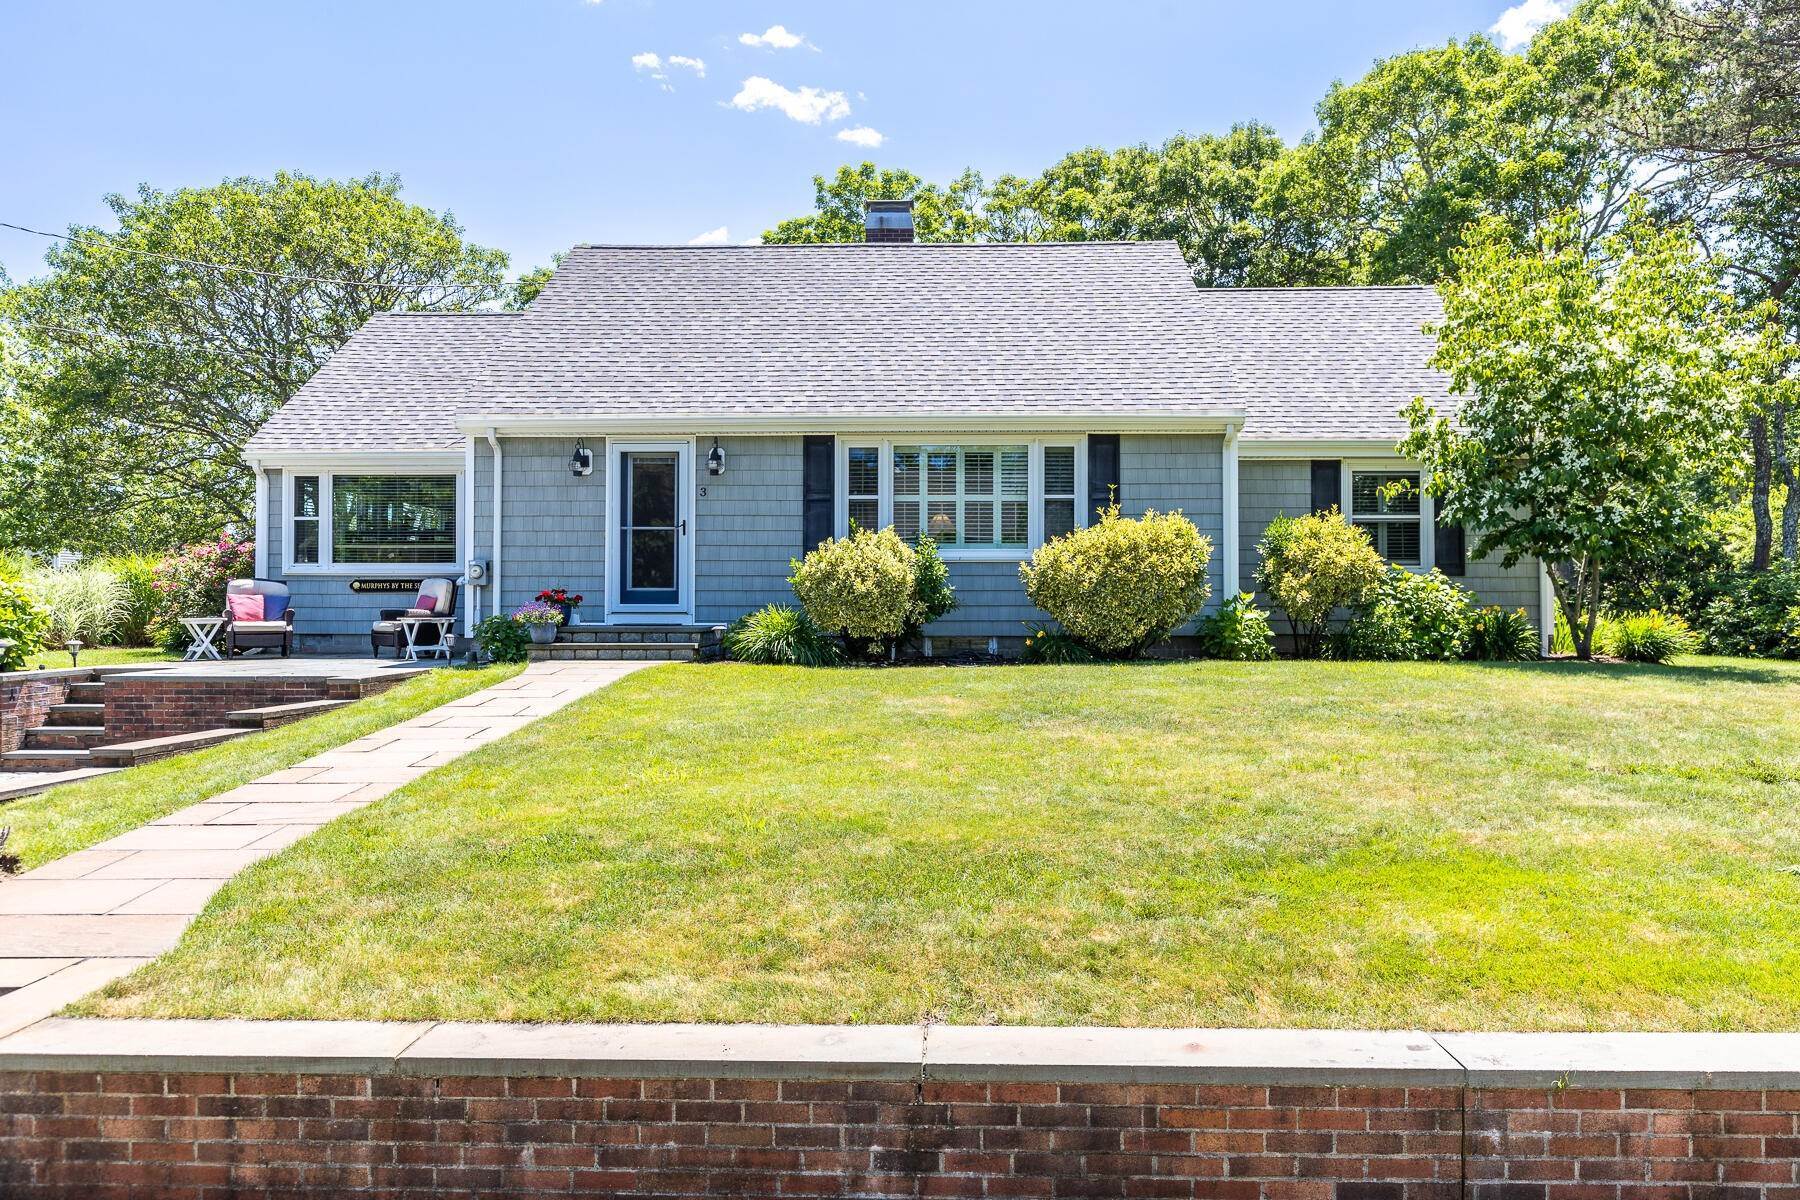 Single Family Homes for Sale at 3 Elliot Road Mashpee, Massachusetts 02649 United States